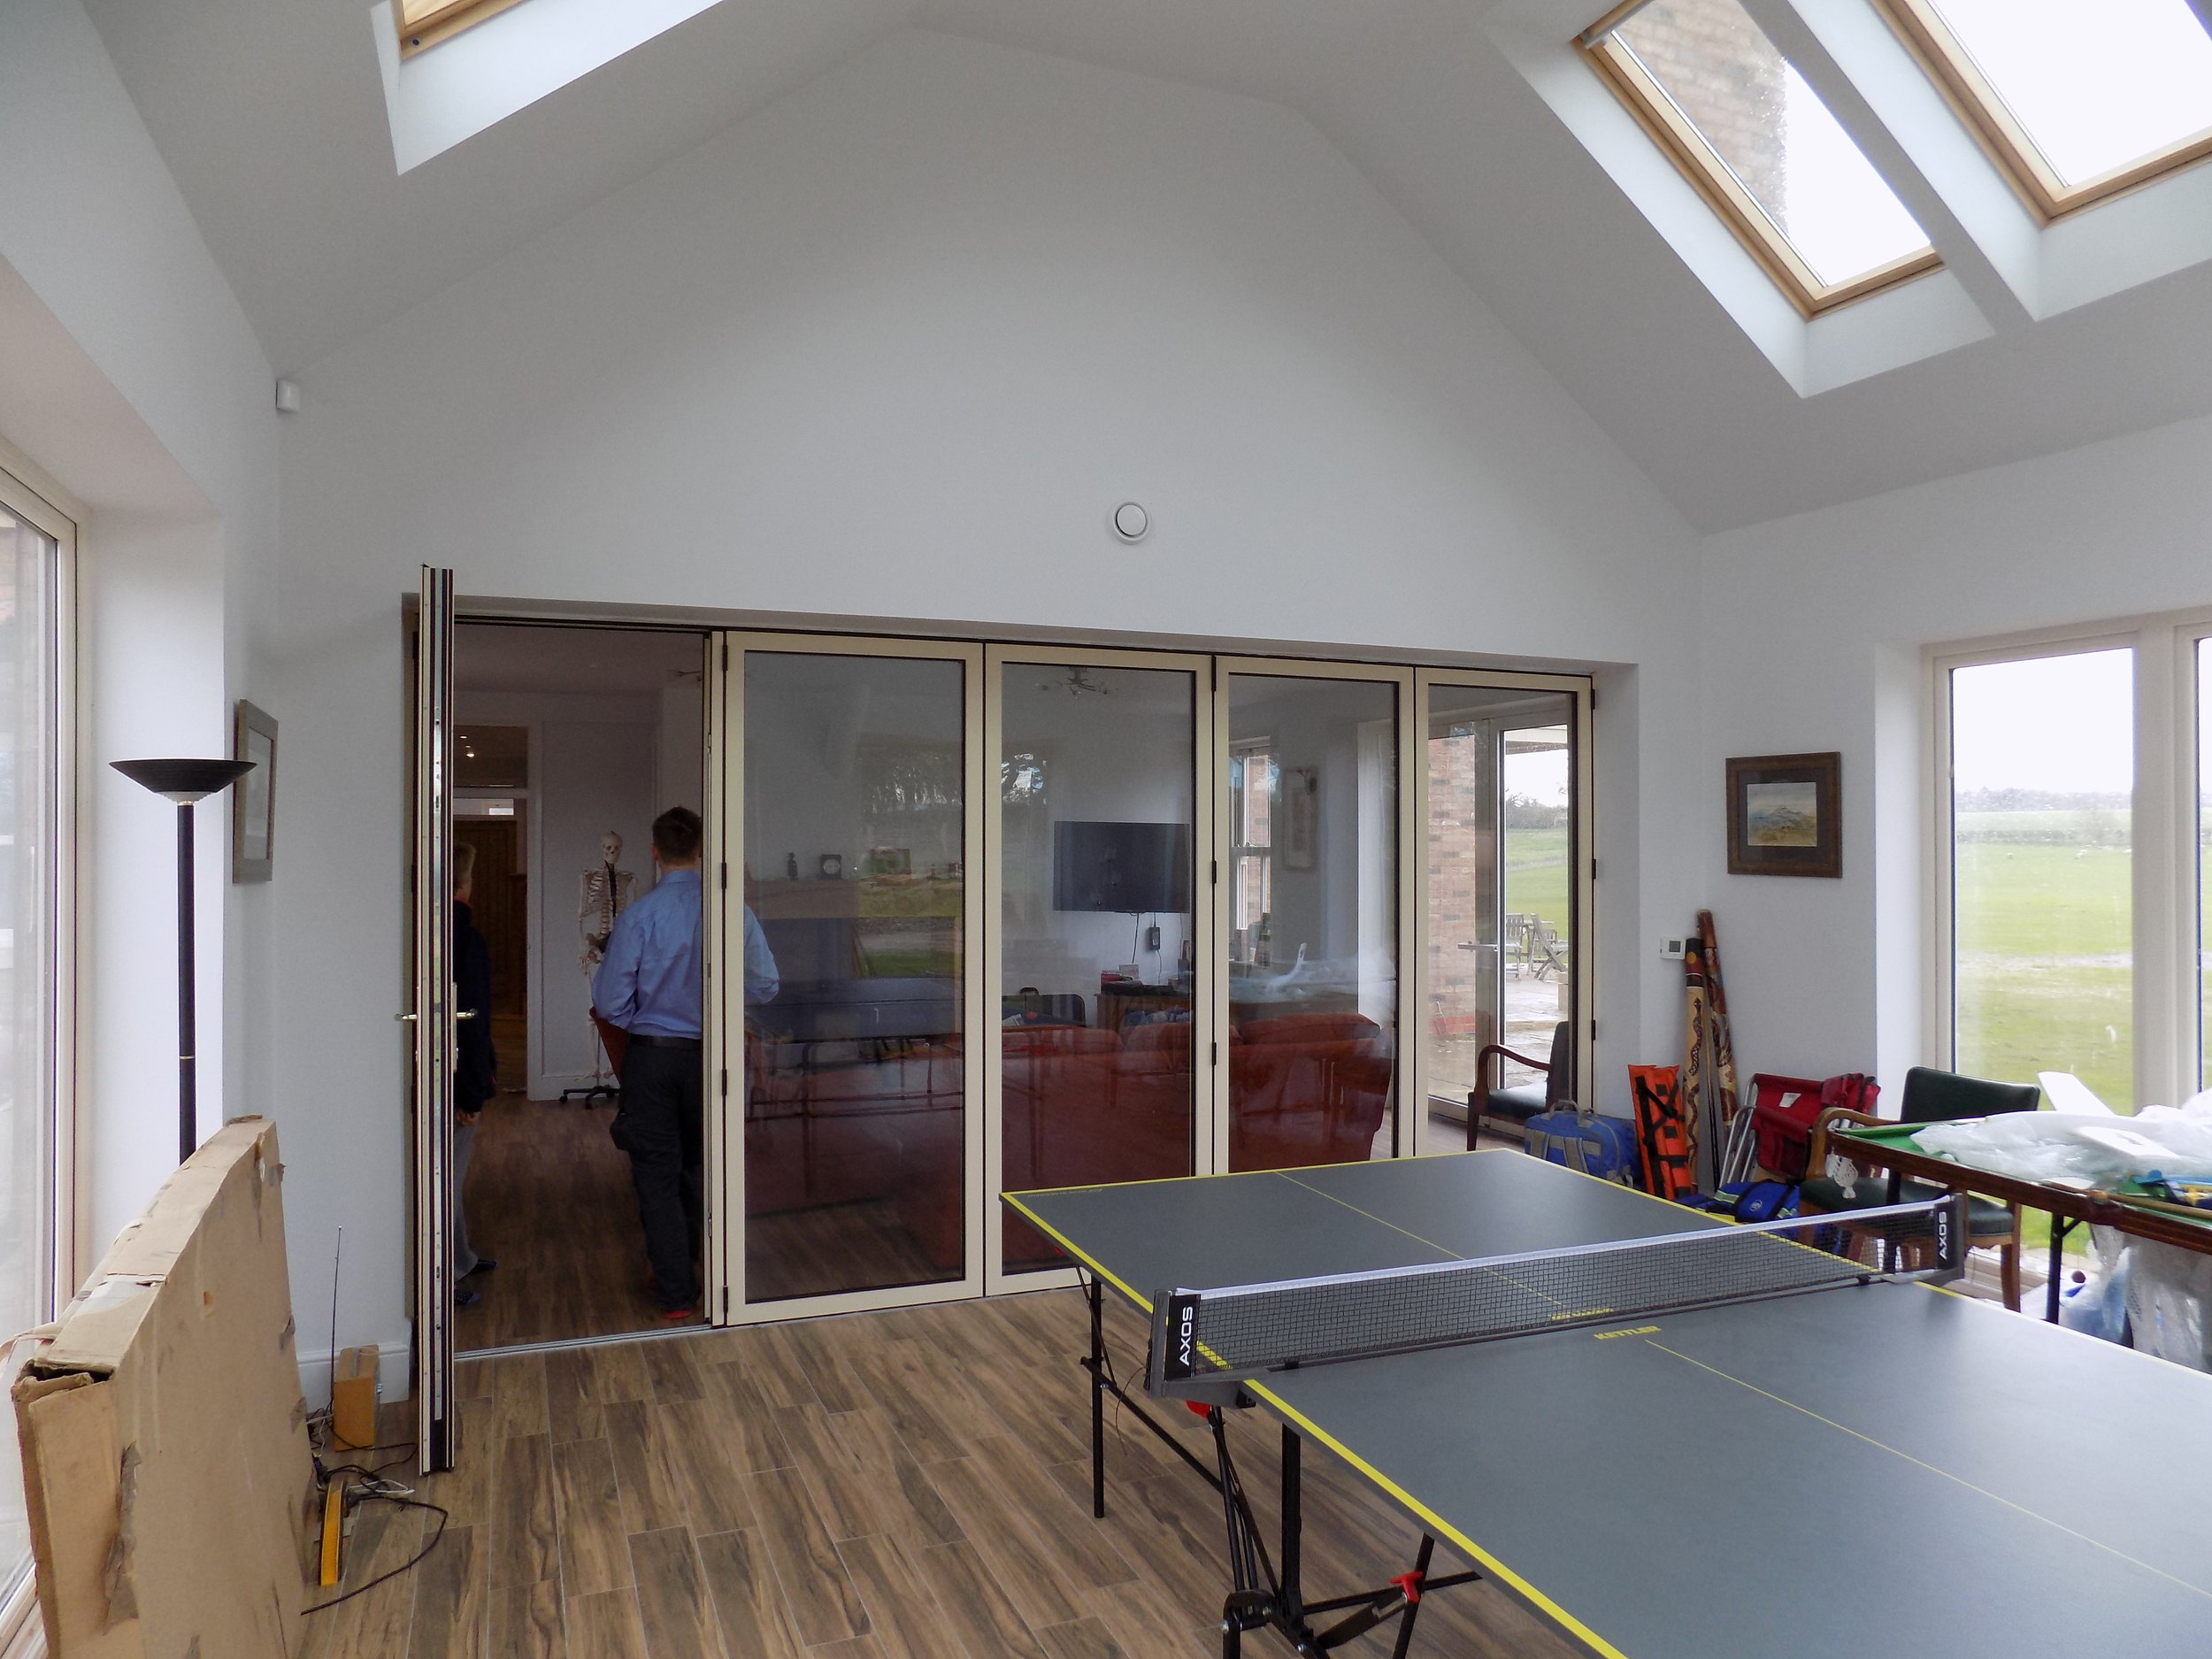 Sun Lounge Interior - Etton House - Beverley Architects - Samuel Kendall Associates